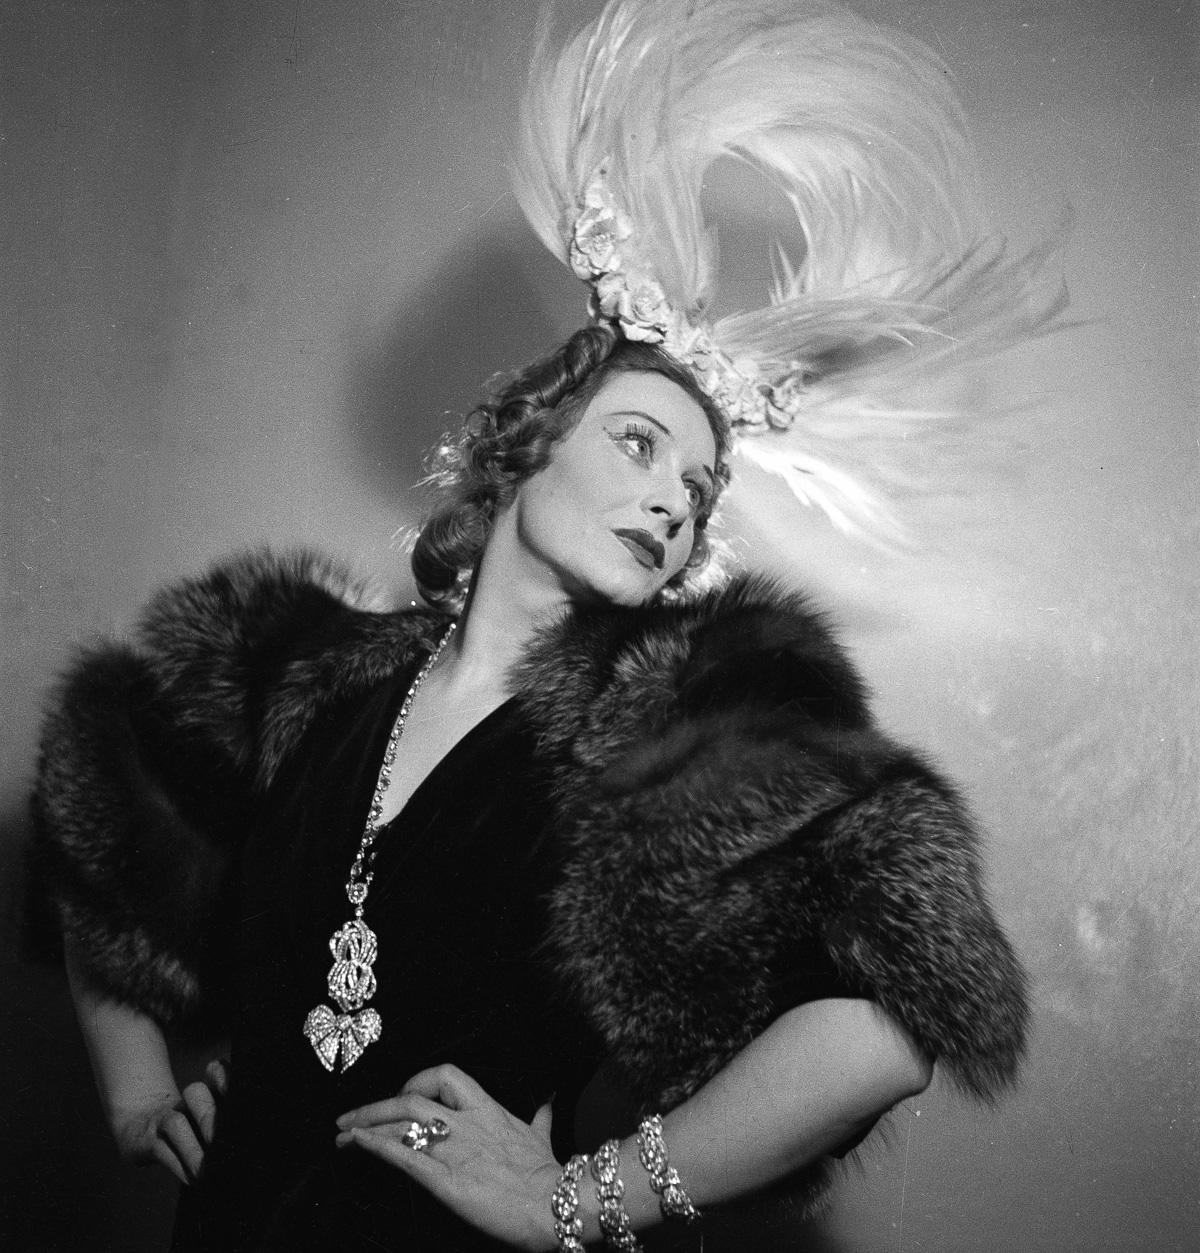 Folies Bergère in 1937 Photography Memories - Fubiz Media